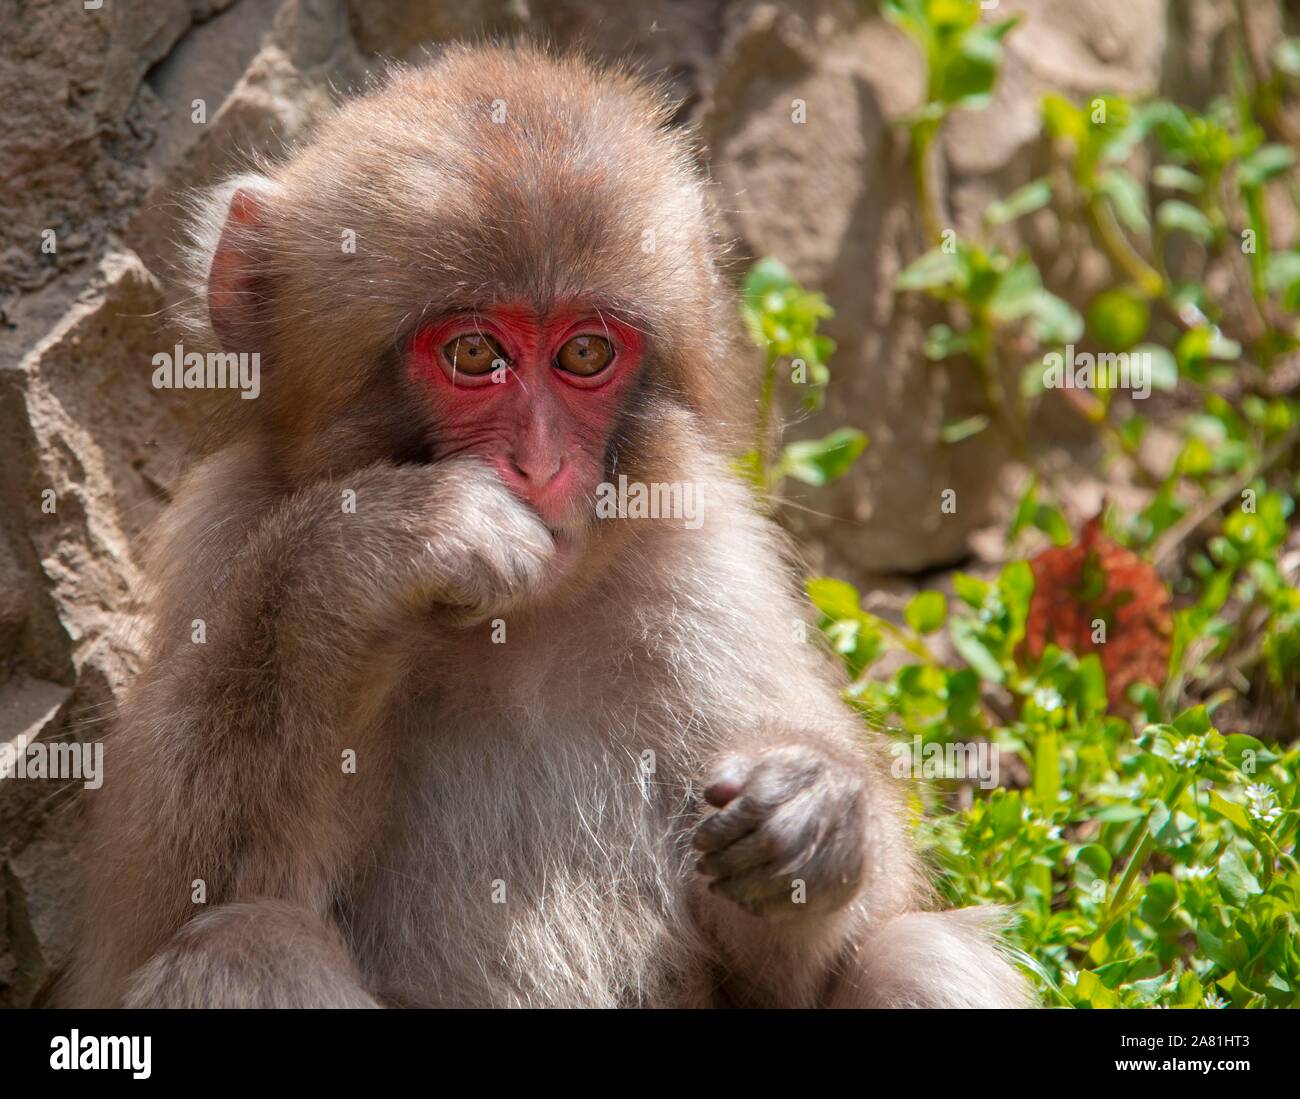 Macaque giapponese (Macaca fuscata), giovane animale, Yamanouchi, Prefettura di Nagano, isola di Honshu, Giappone Foto Stock